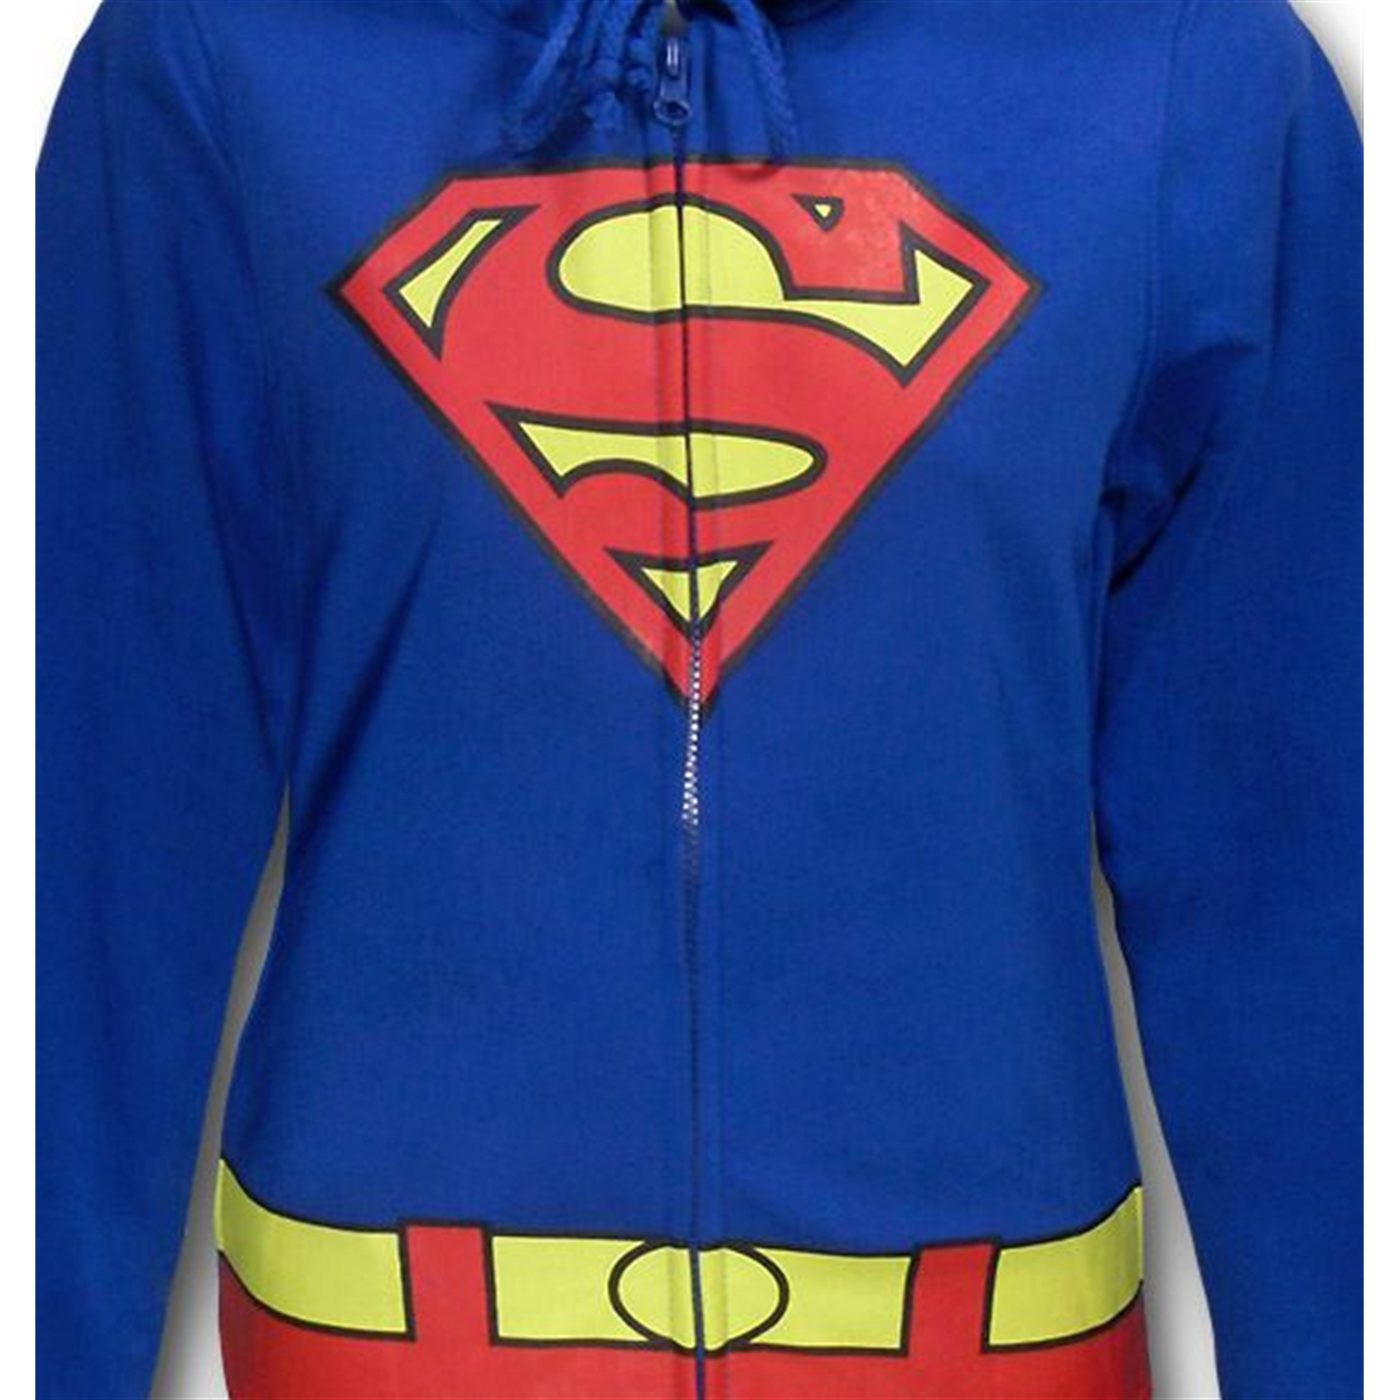 Supergirl Women's Costume Hoodie